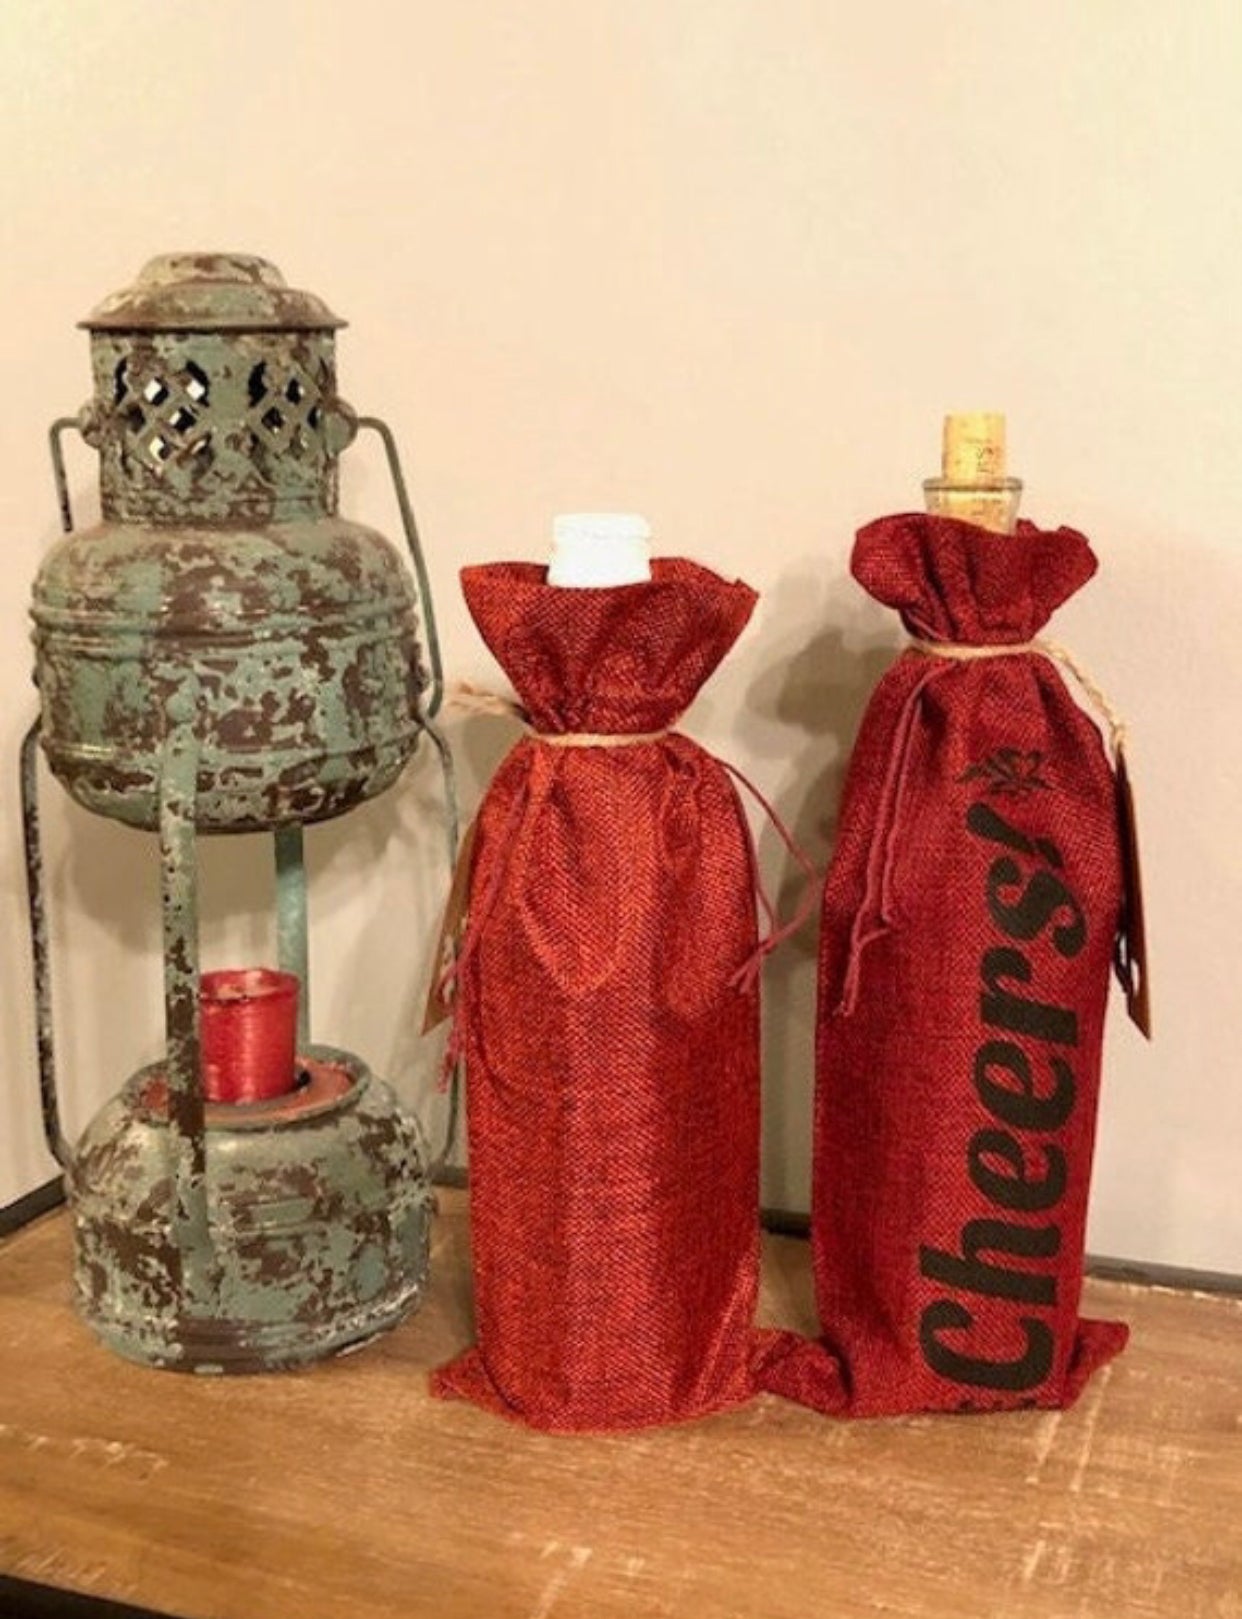 Merlot personalized Cheers burlap wine gift bag